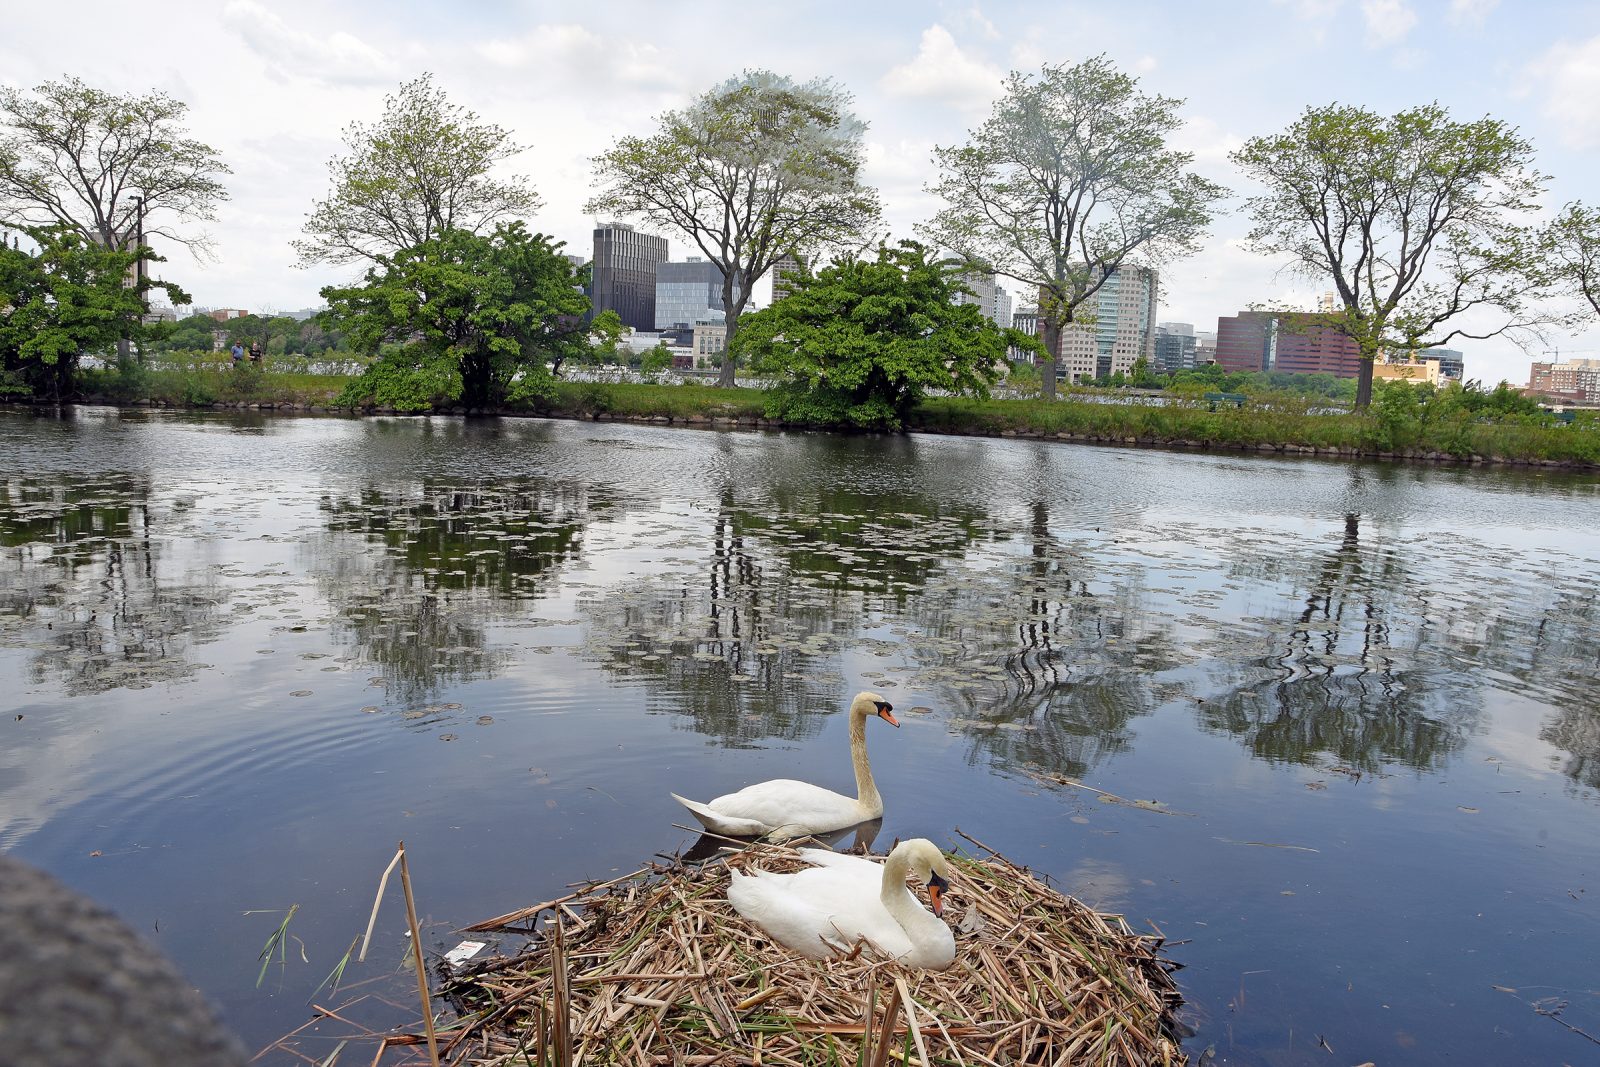 Swans nest on banks of Charles River